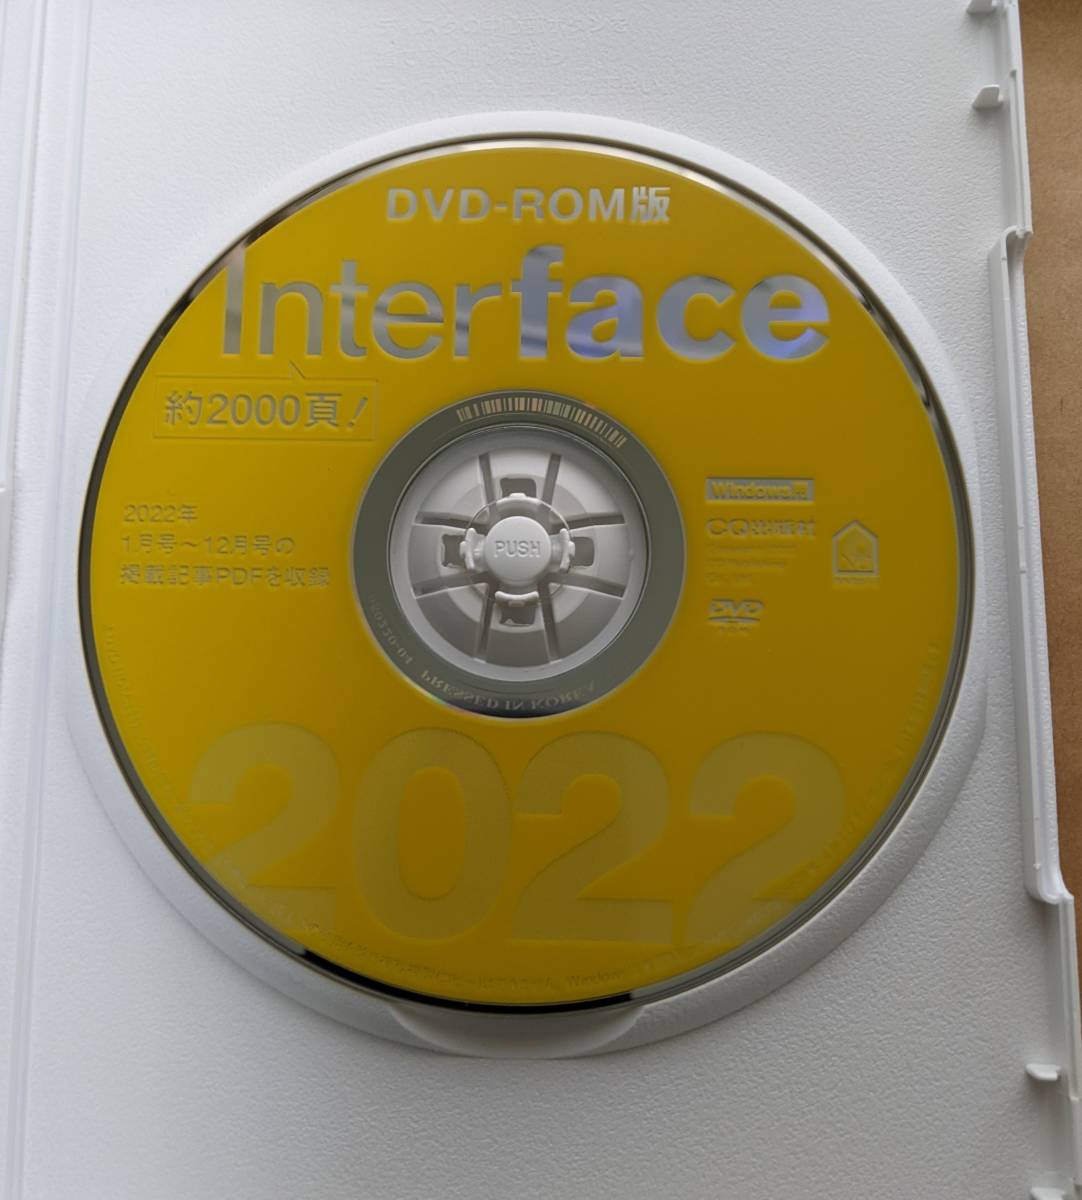 DVD-ROM版 Interface 2022｜Yahoo!フリマ（旧PayPayフリマ）